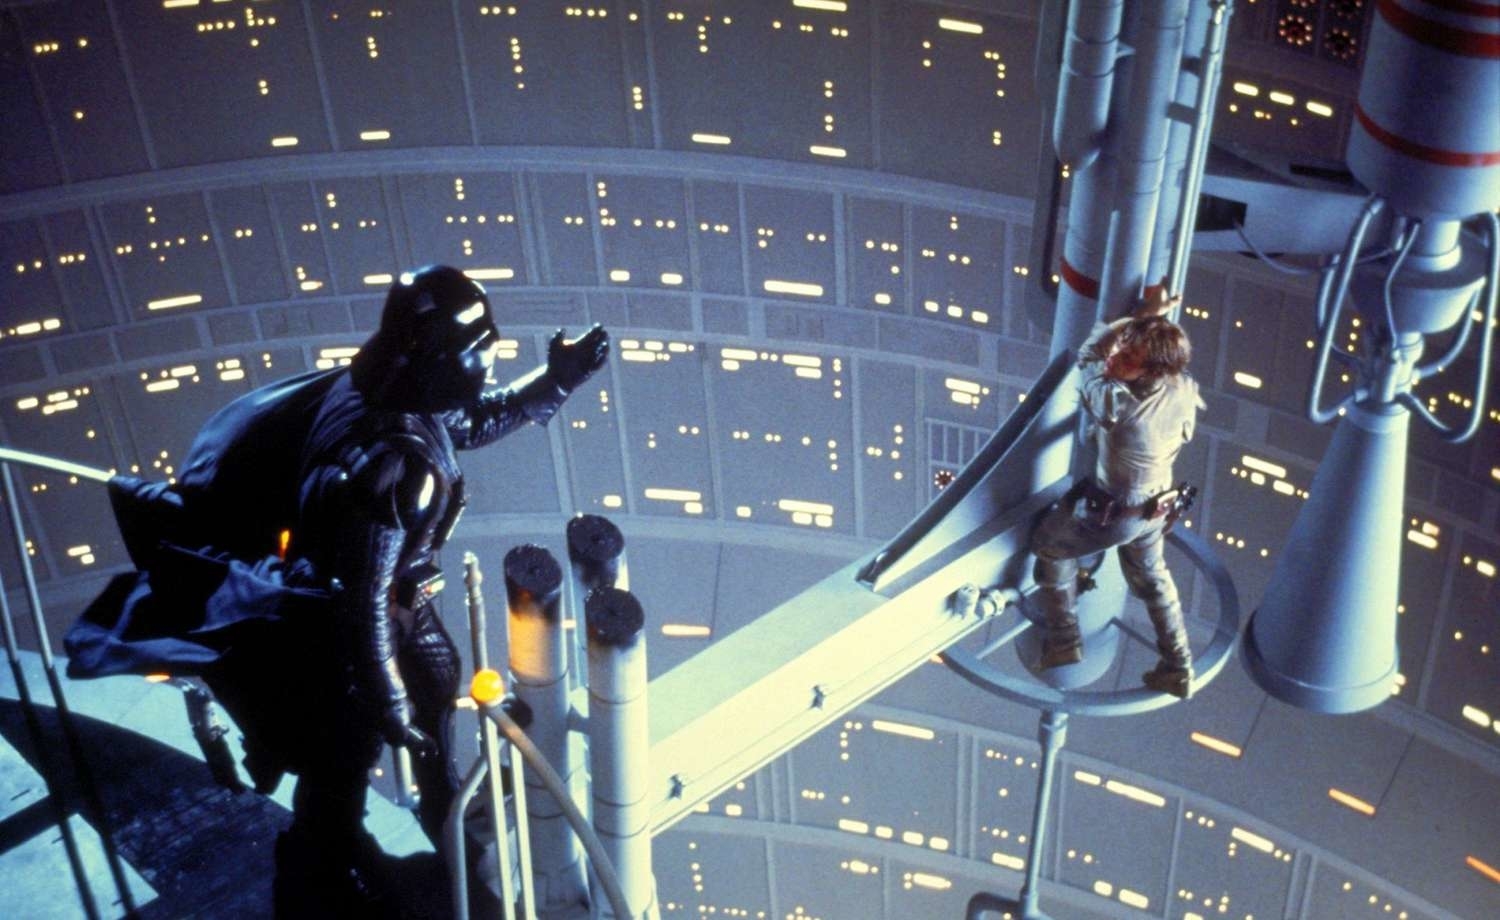 Darth Vader stands facing Luke Skywalker in a tense duel on a narrow platform